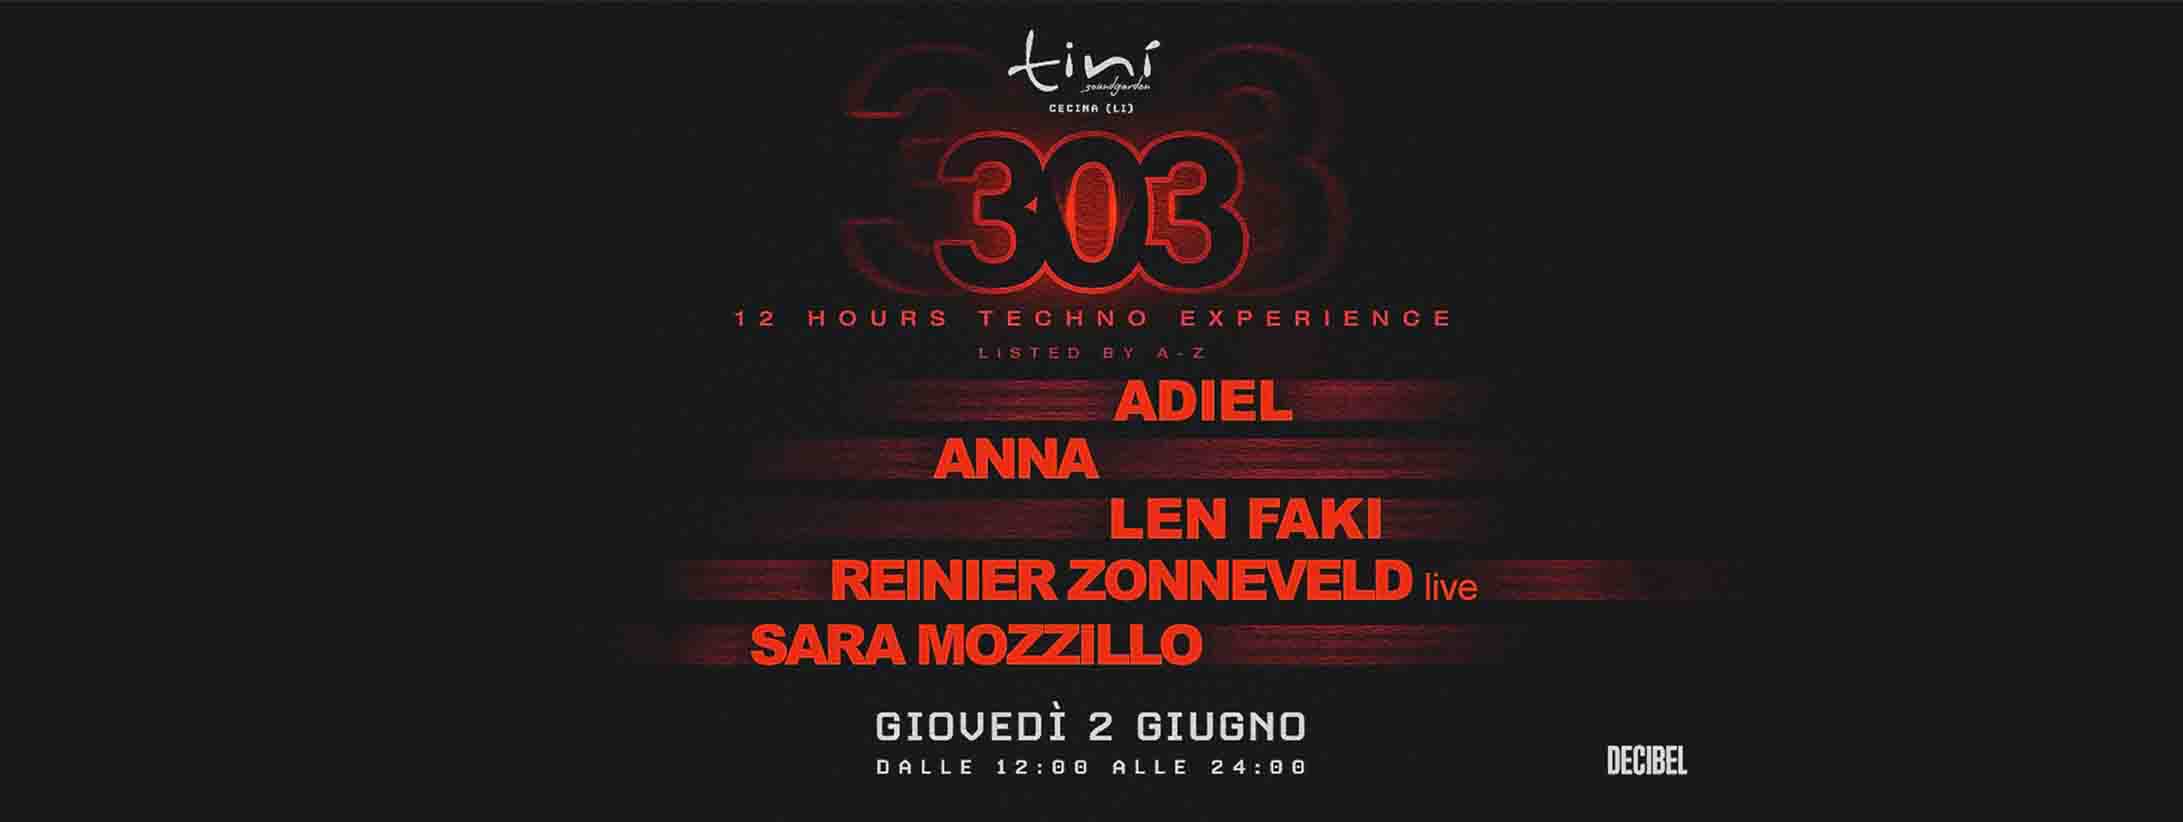 tini-soundgarden-303-techno-experience-02-06-2022